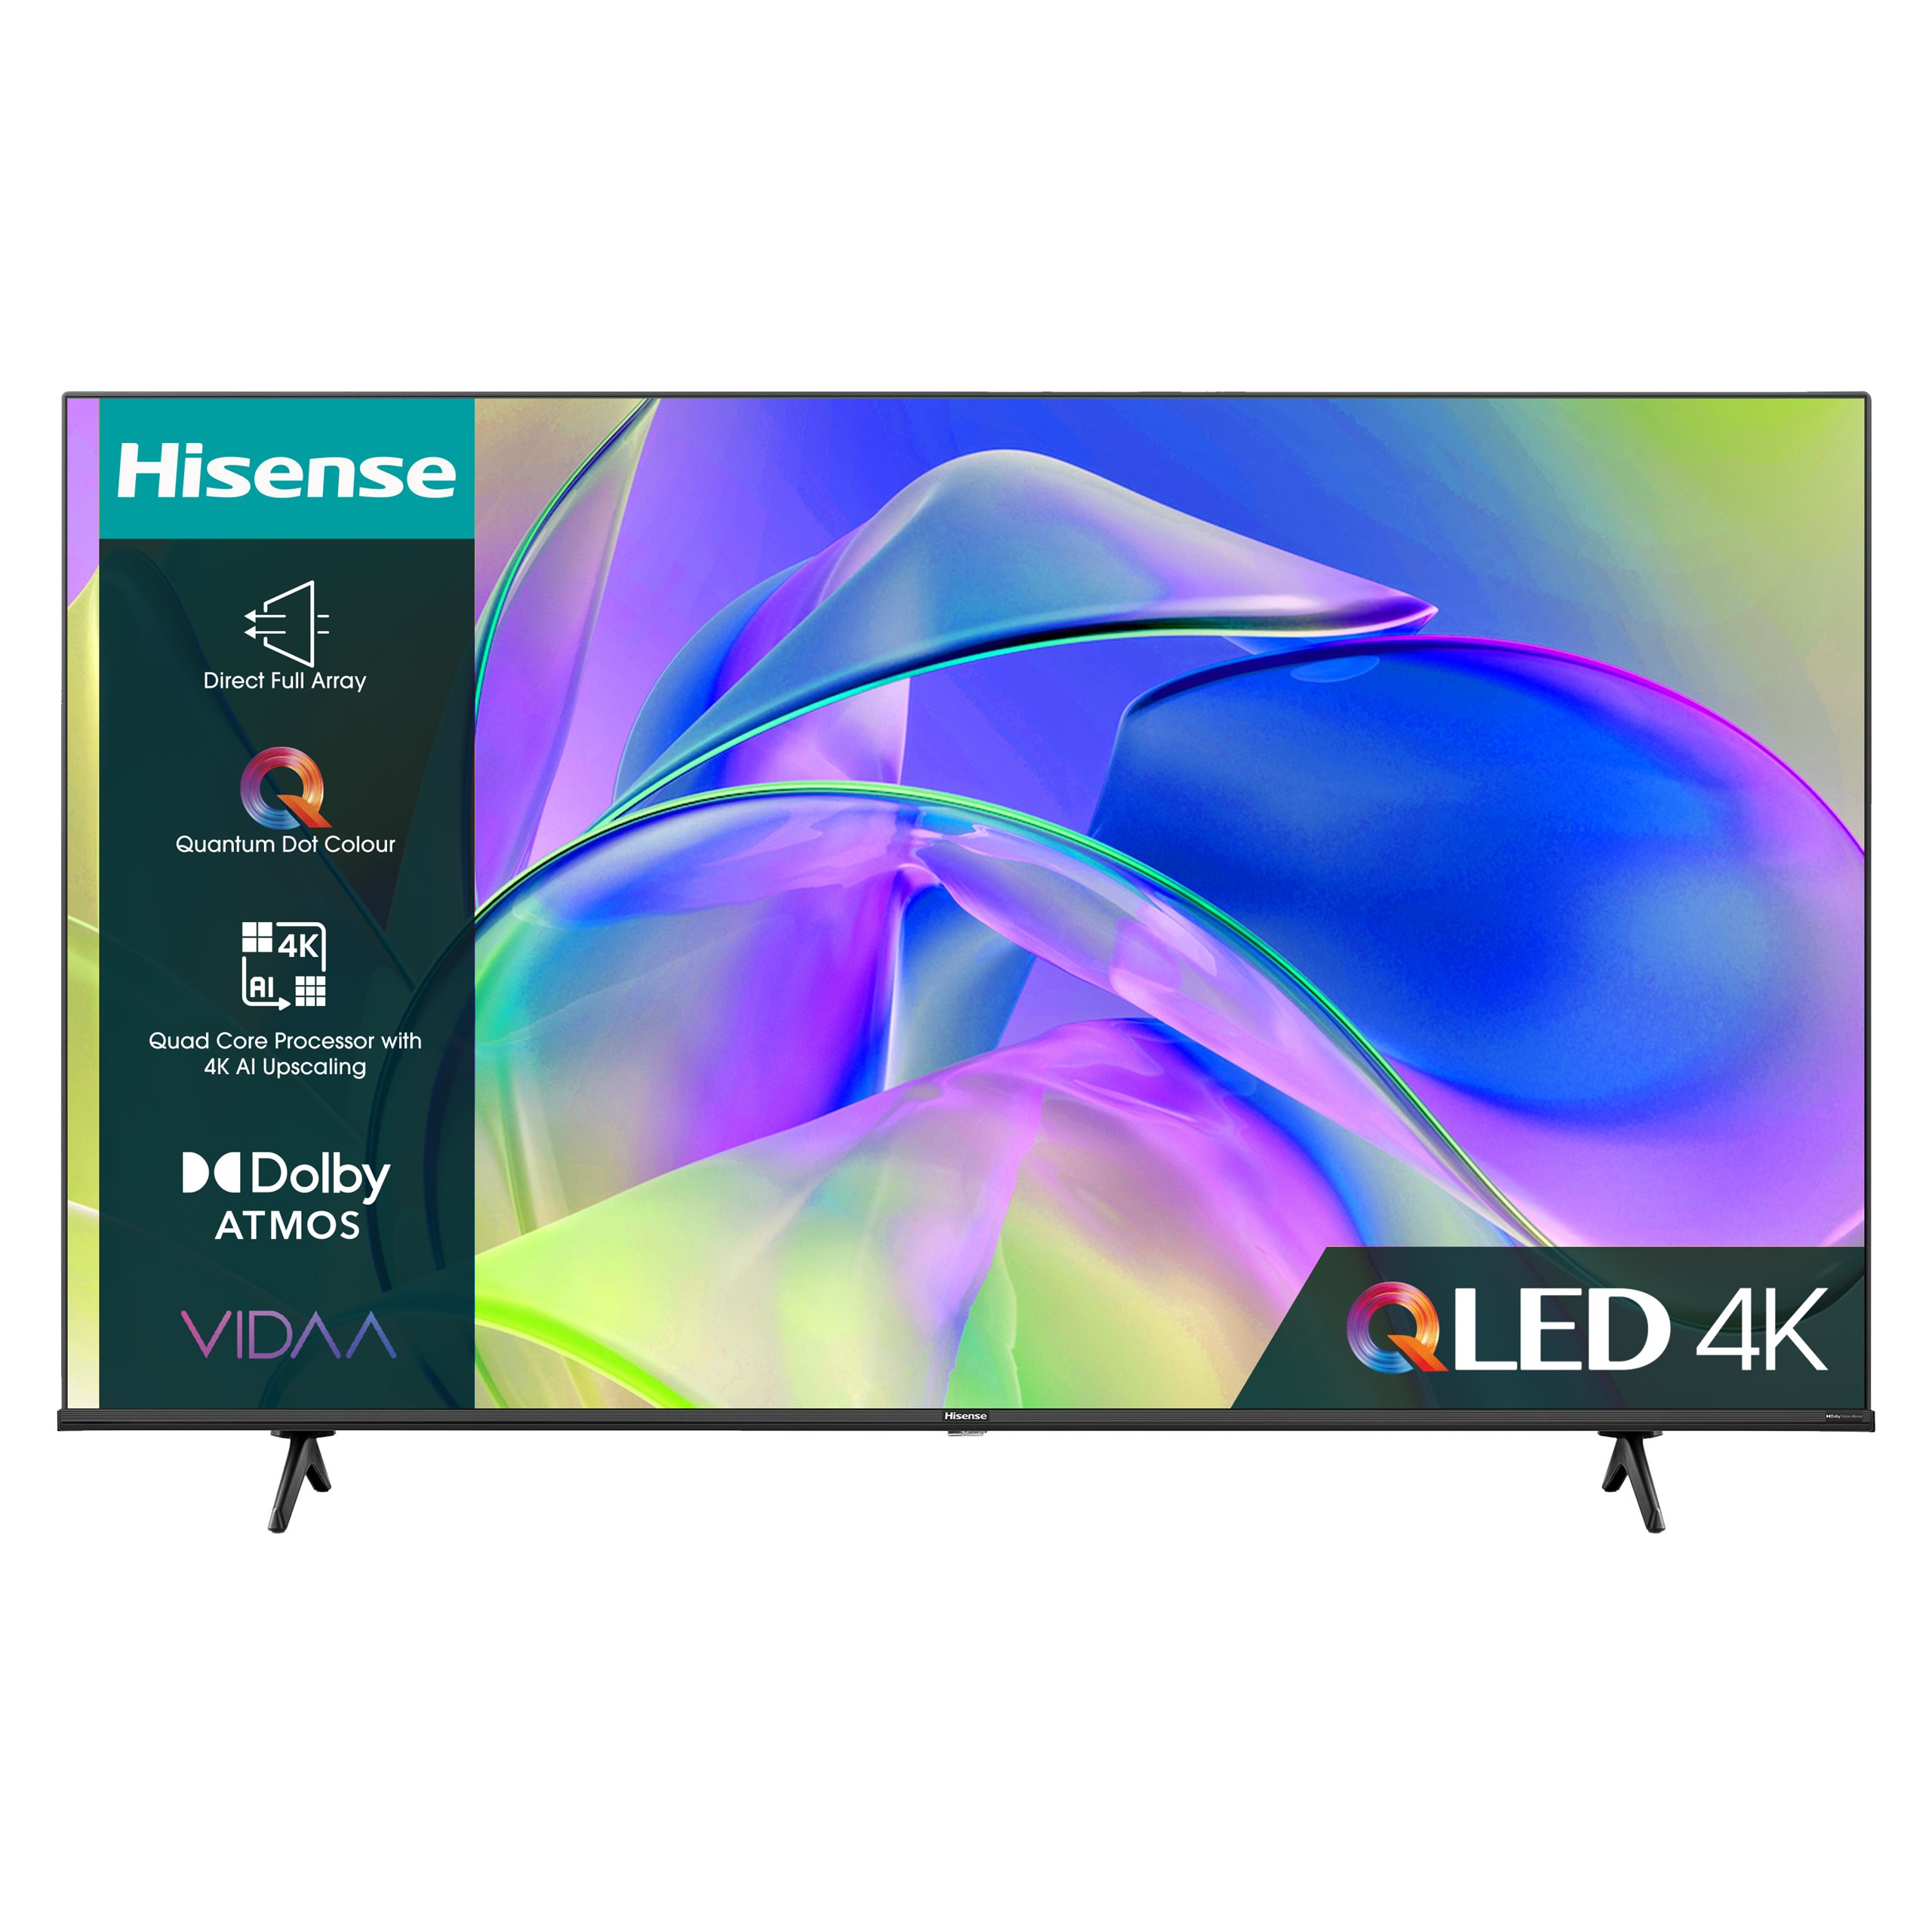 Hisense 55 Inch 144Hz QLED Gaming TV 55E7KQTUK PRO - 144Hz VRR, HDMI 2.1,  Freesync Premium, Quantum Dot Colour, VIDAA U7, and , Freeview Play,  Netflix and Disney+ (2023 New Model) 